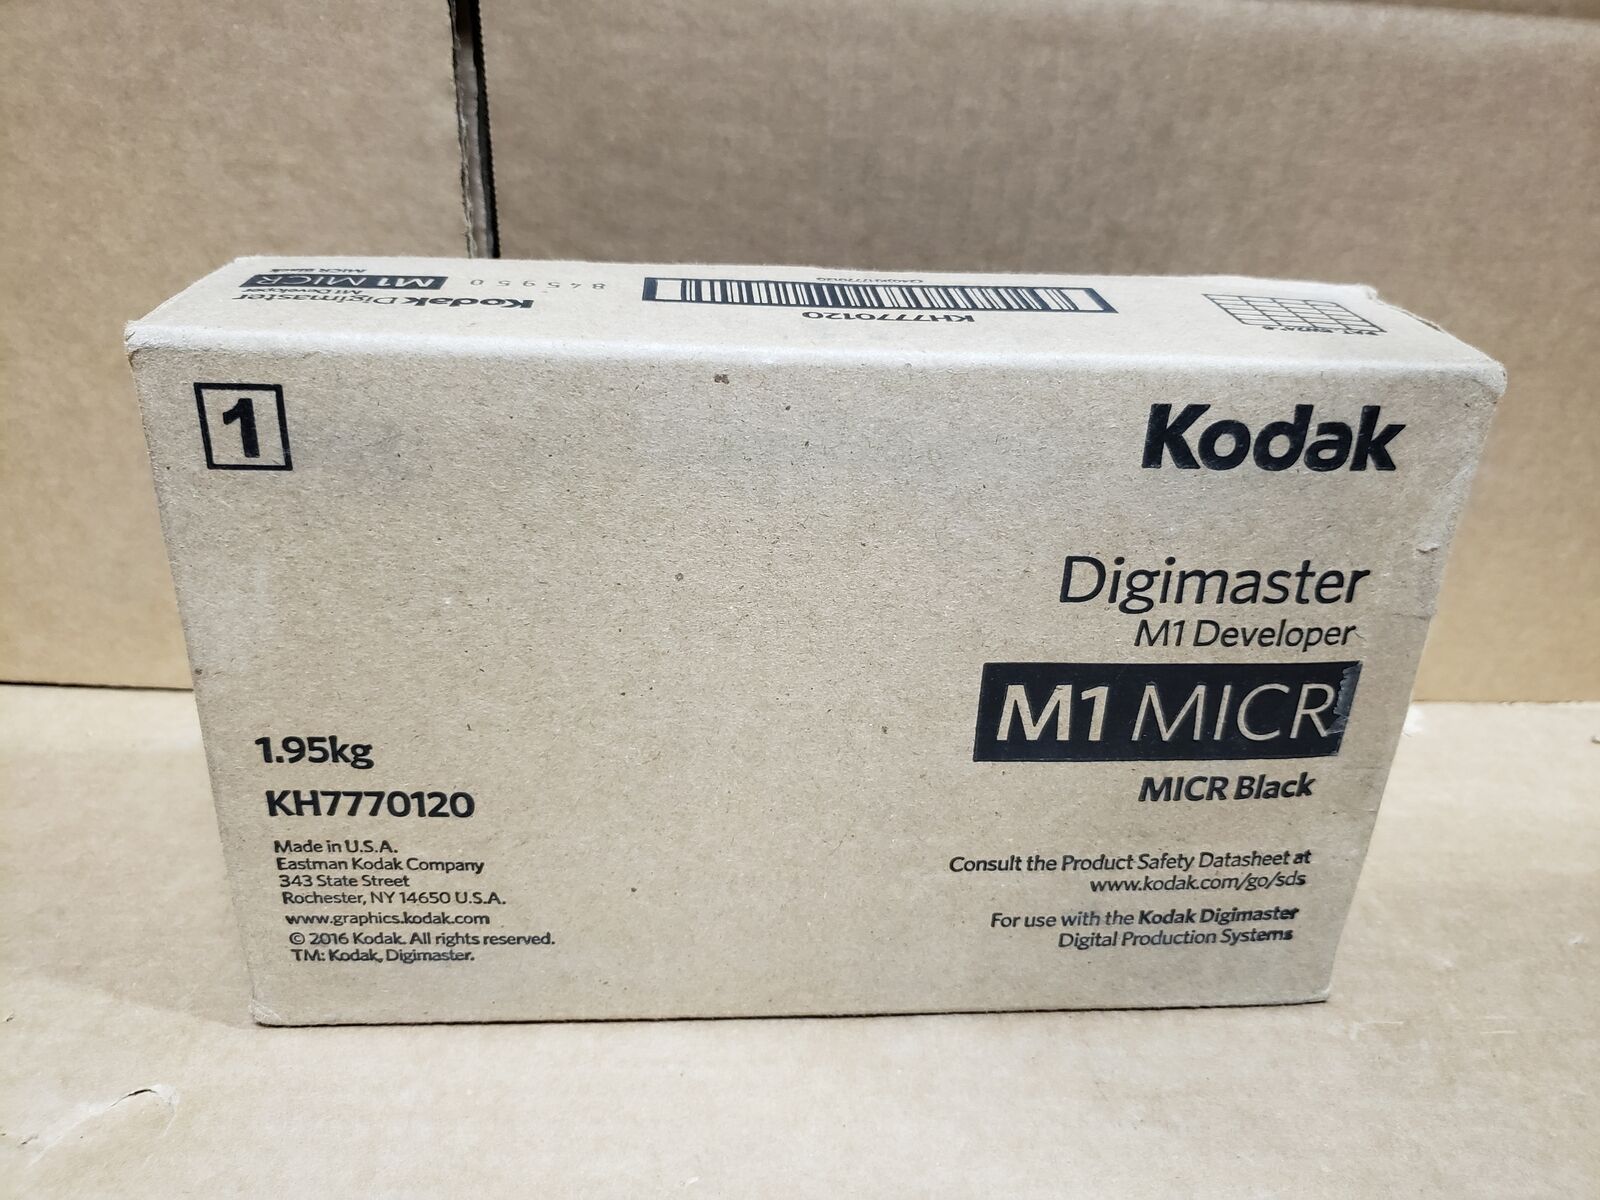 KH7770120 – Kodak M1 MICR Developer for DigiMaster Series inc. 9150, E150, EX150